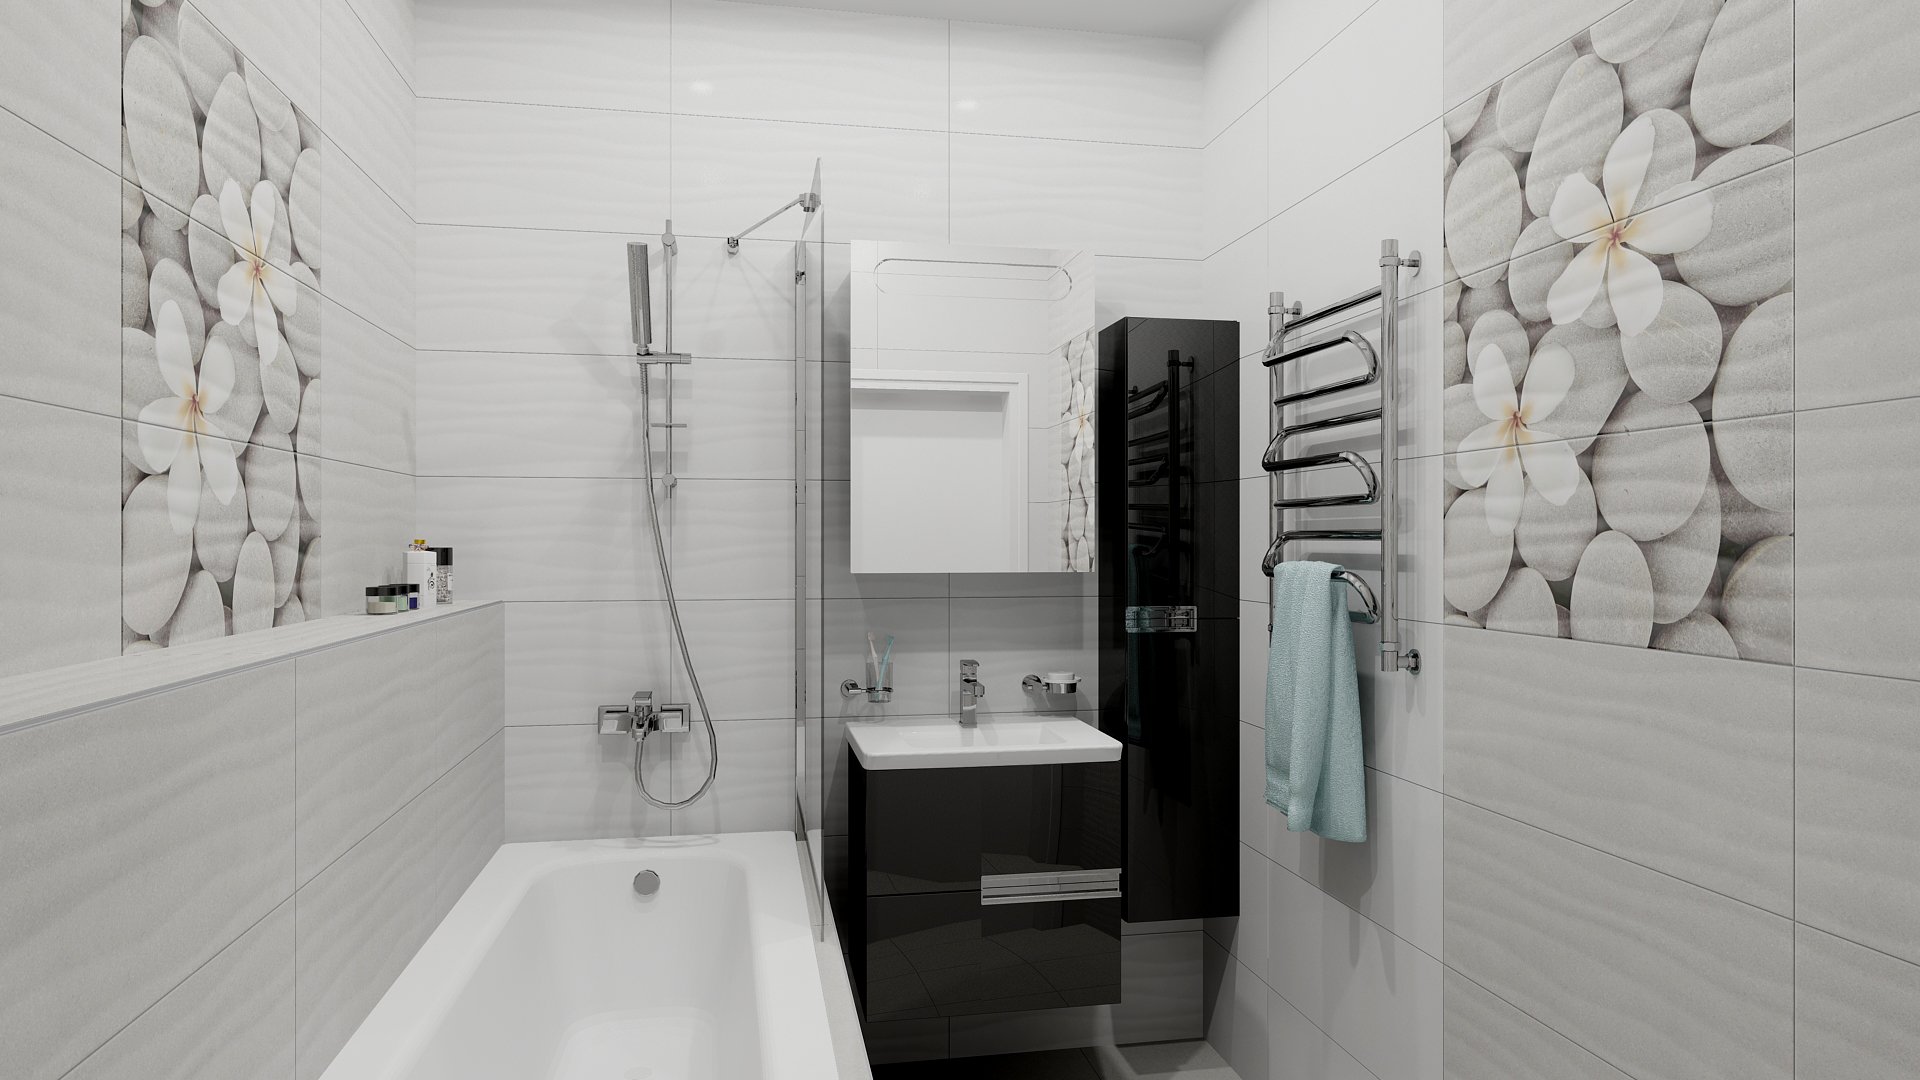 Ванная комната без плитки: дизайн и фото, варианты и материалы отделки